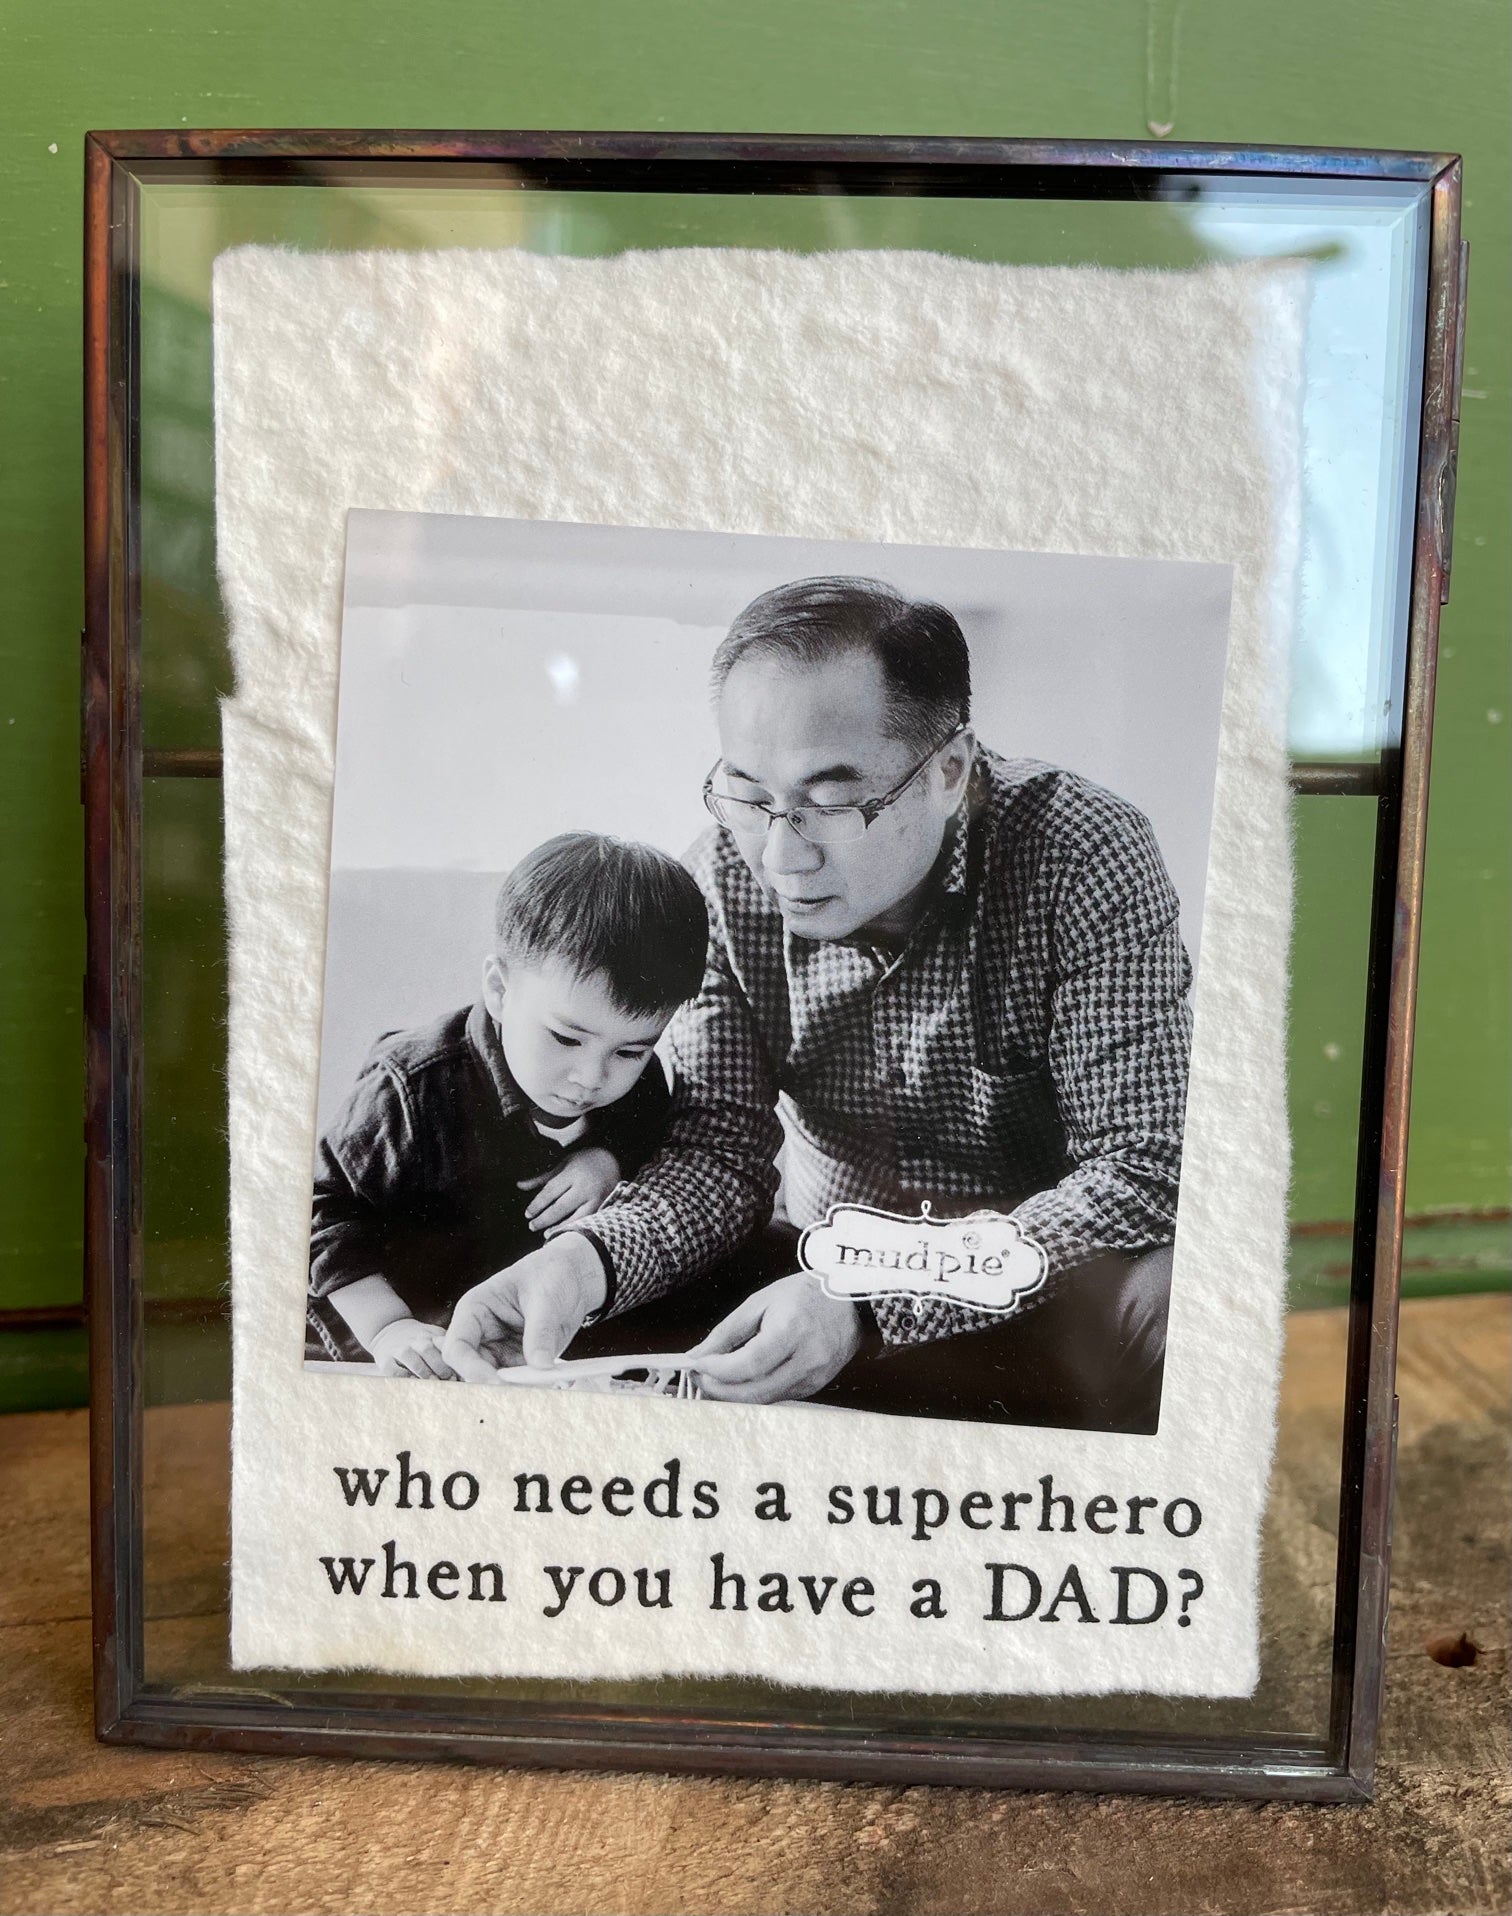 "who needs a superhero when you have a DAD?" brass rimmedframe